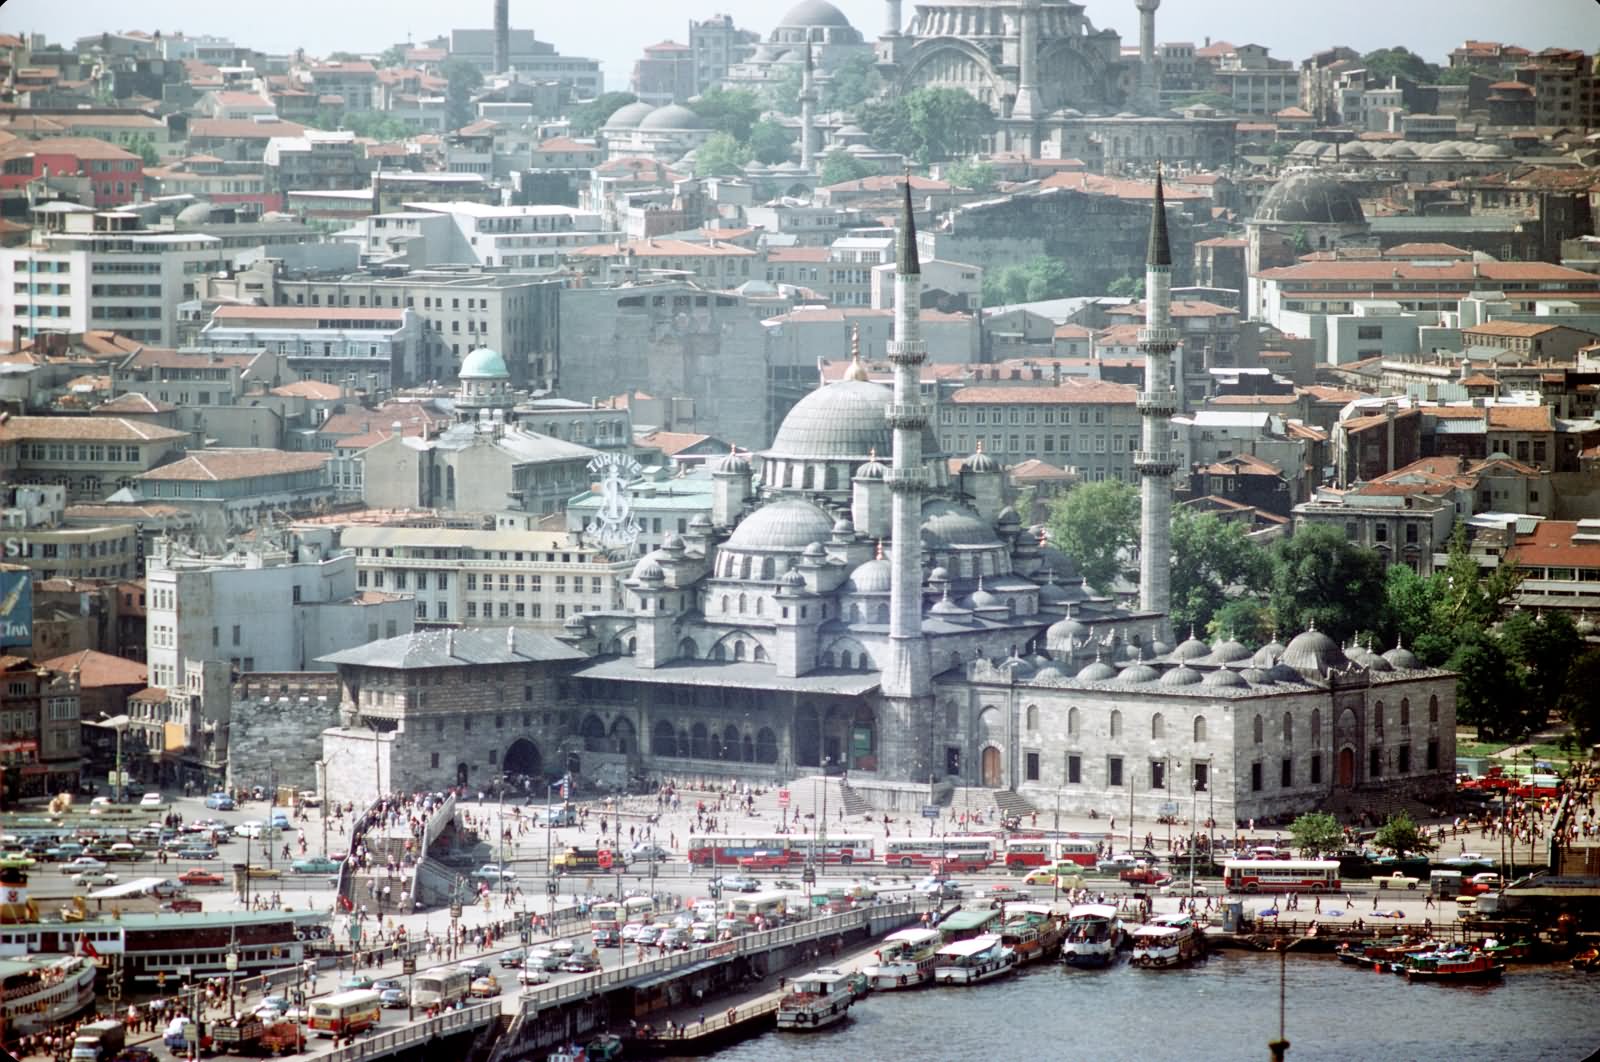 Yeni Cami And The Galata Bridge View